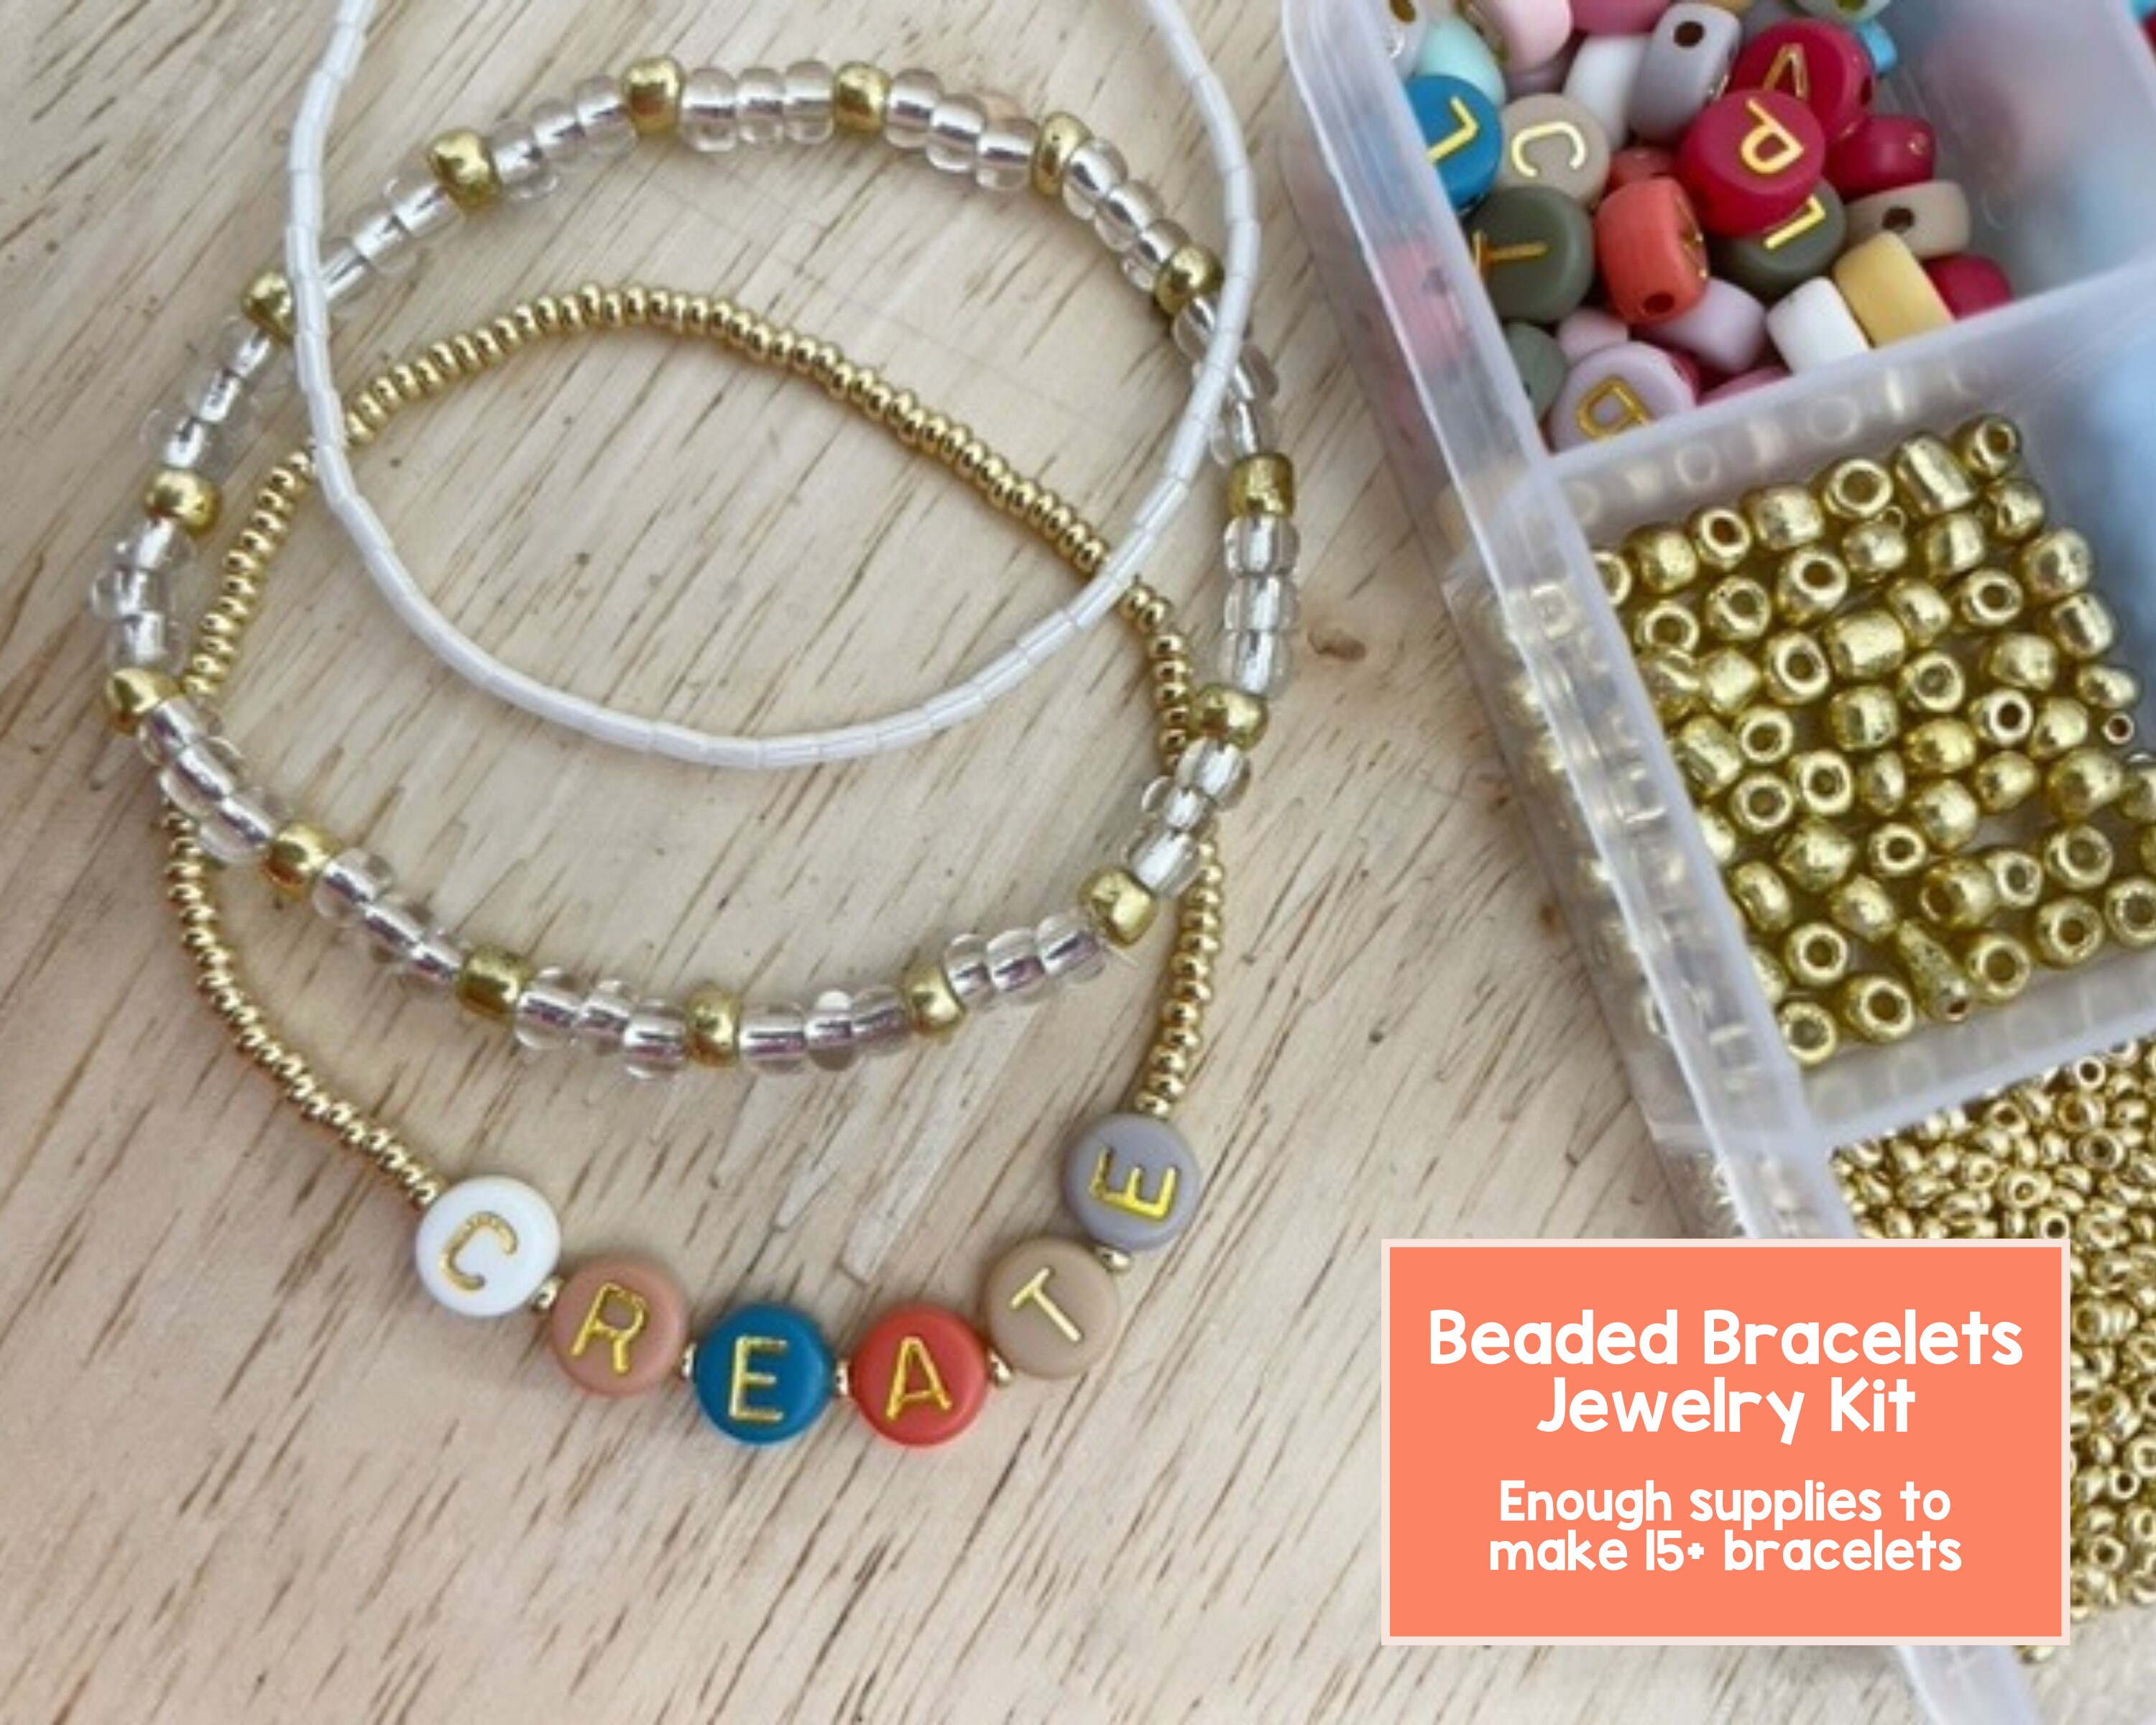 DIY Charm Bracelet Making Kit Flasoo Jewelry Kit for Teen Girls